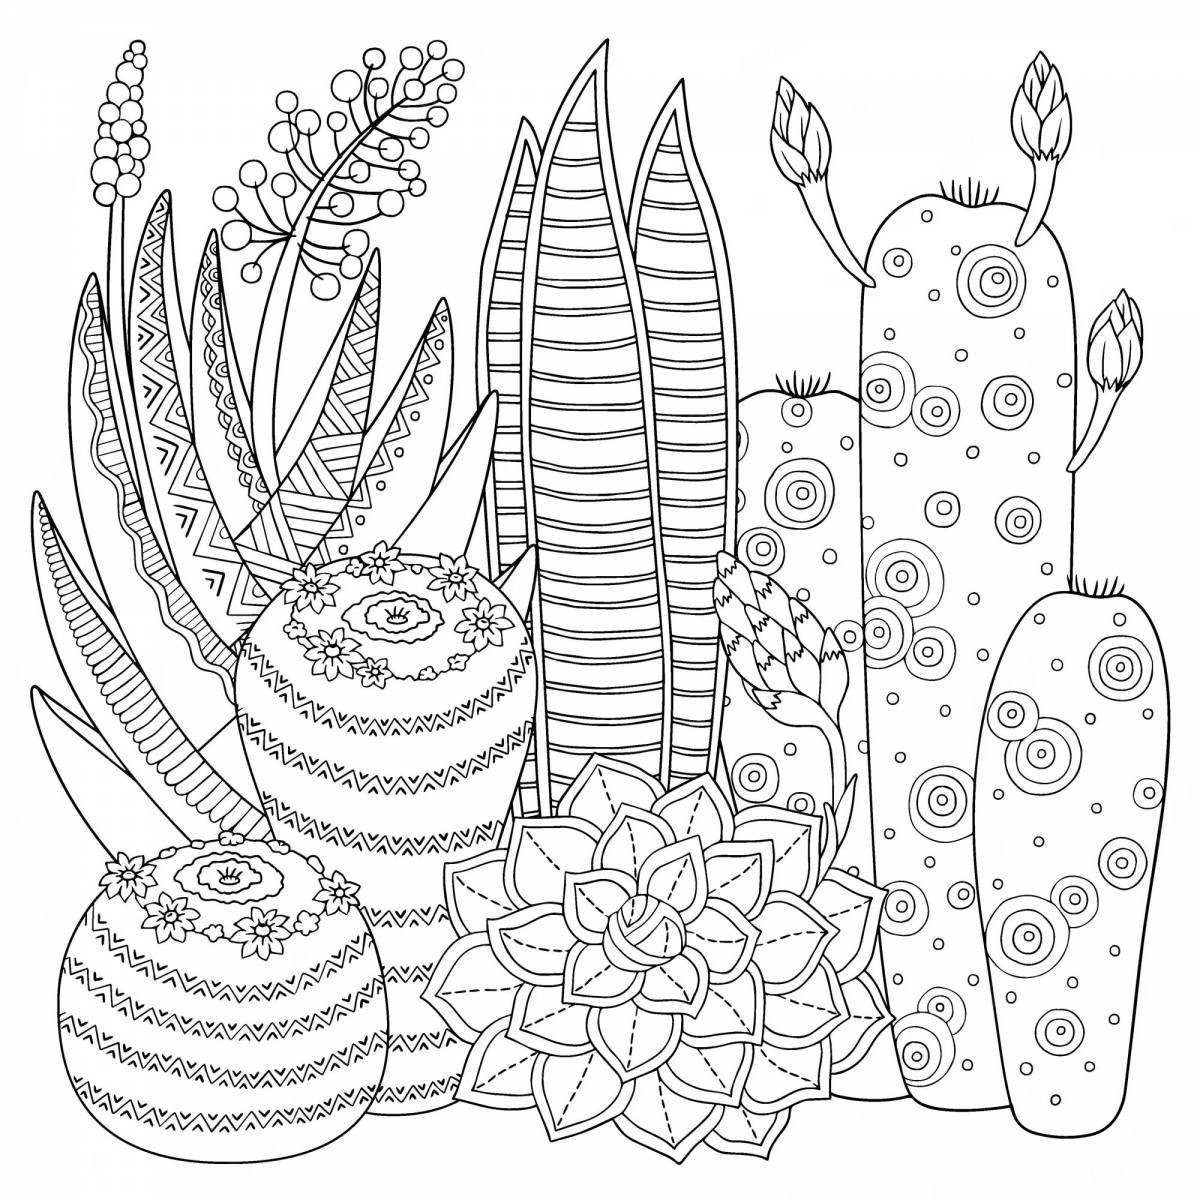 Cute cactus coloring book